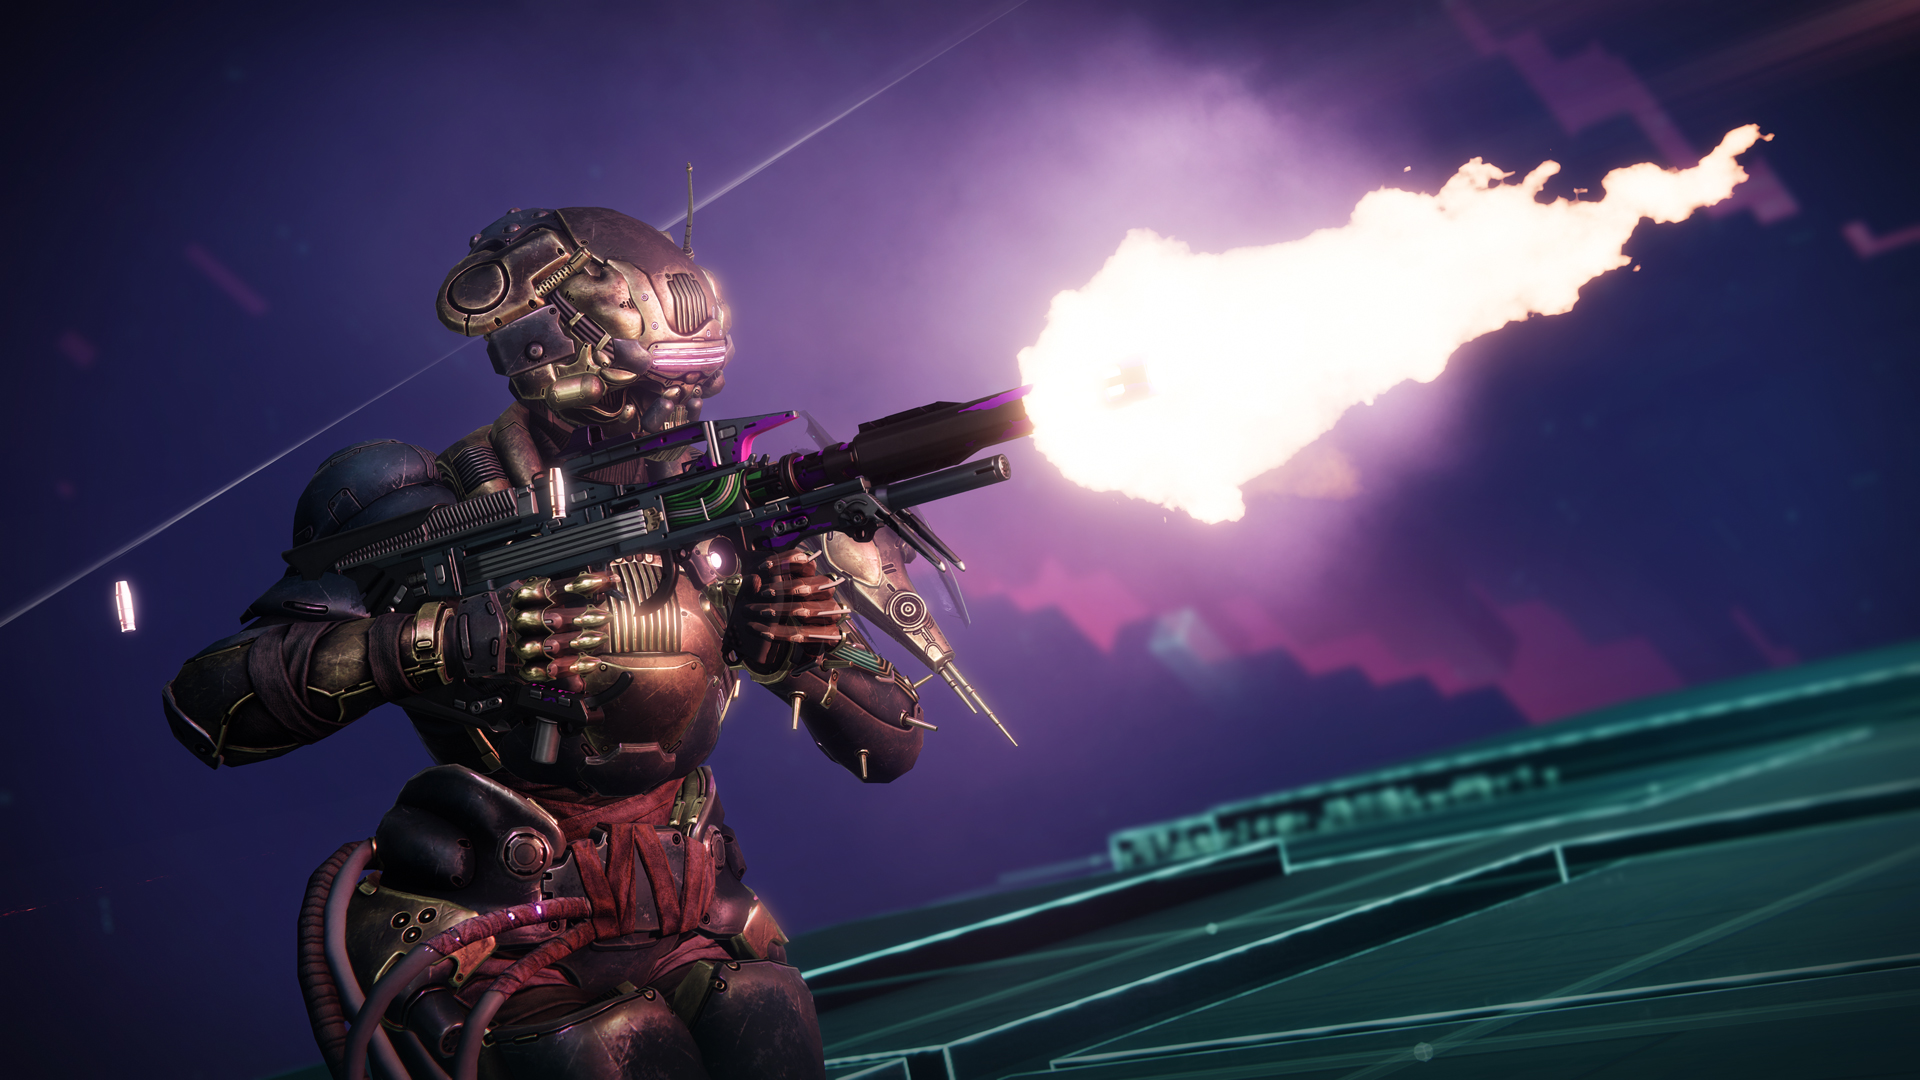 Titan in Splicer armor firing weapon